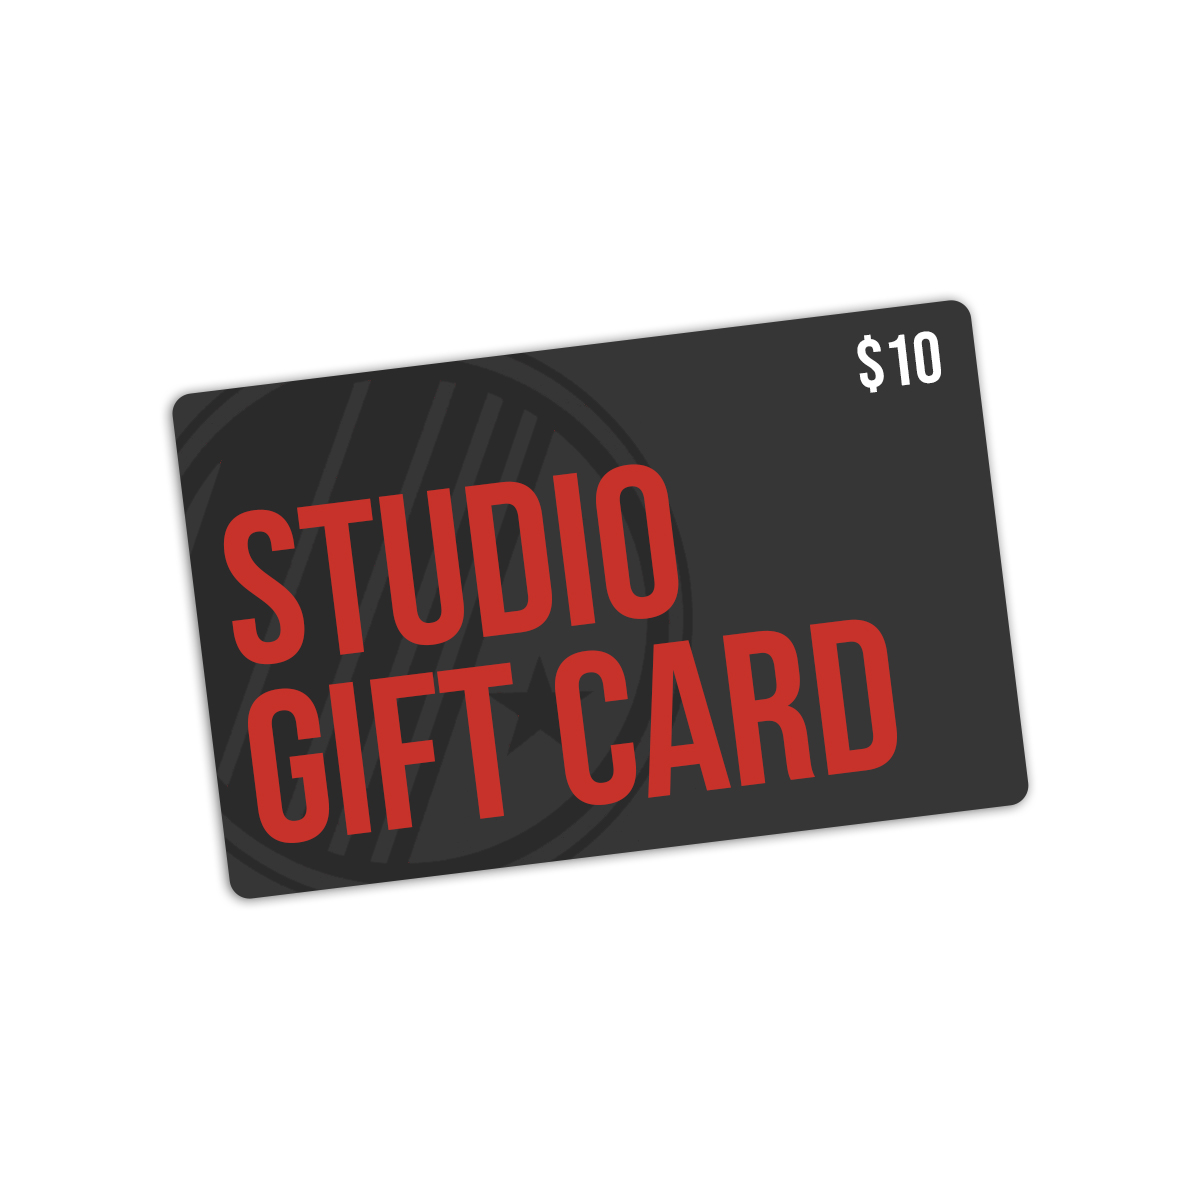 $10 Rev'd Studio gift card